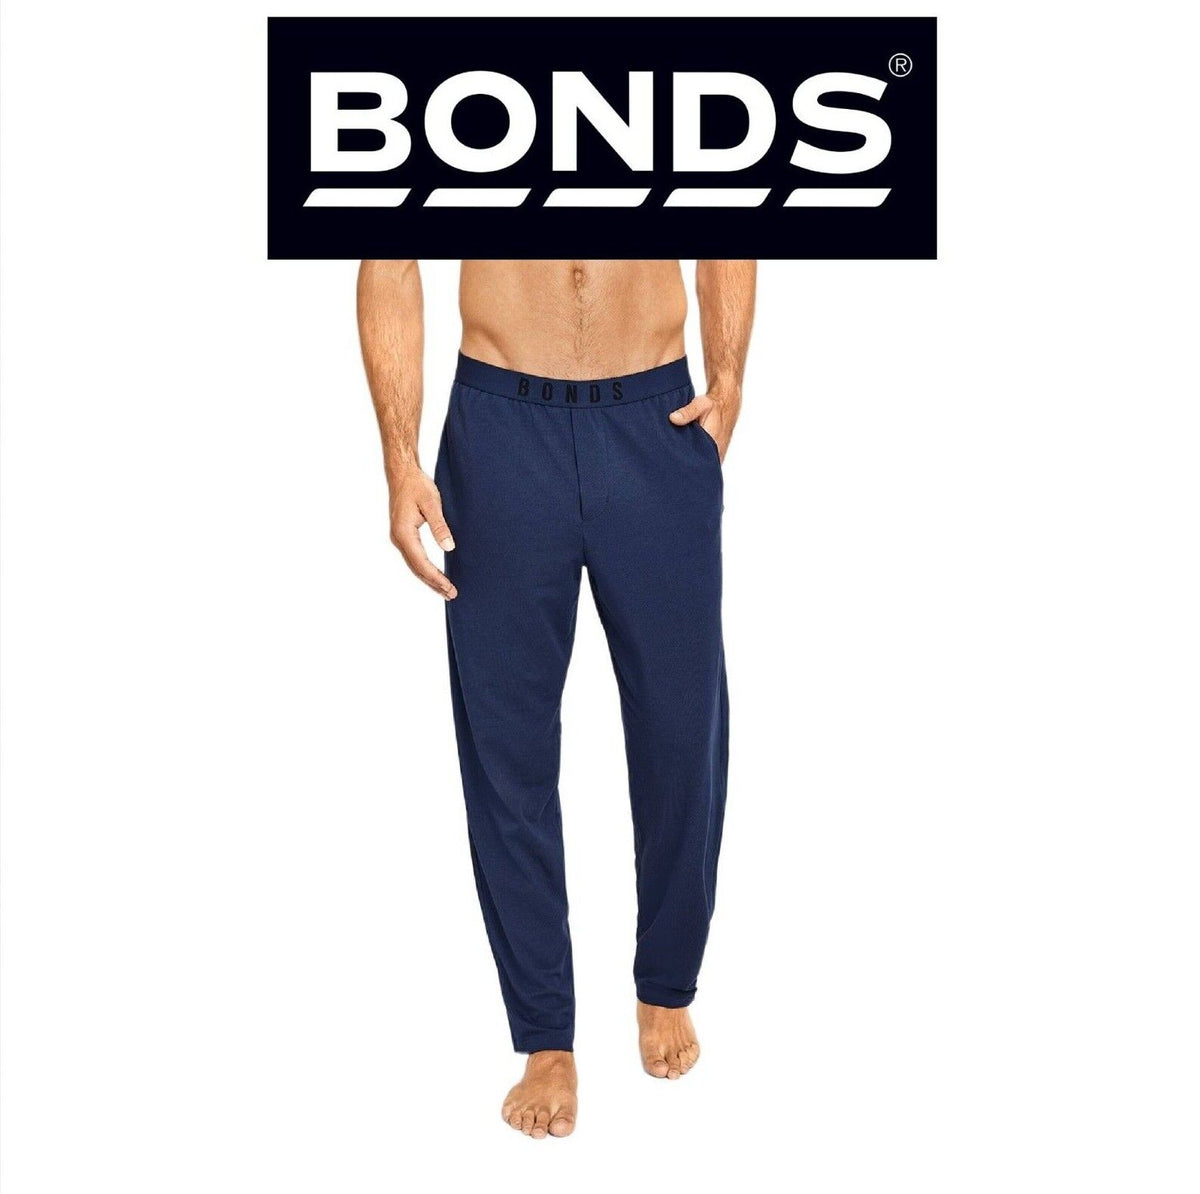 Bonds Mens Comfy Livin Jersey Pant Soft Stretchable Elastic Waist MXM9A